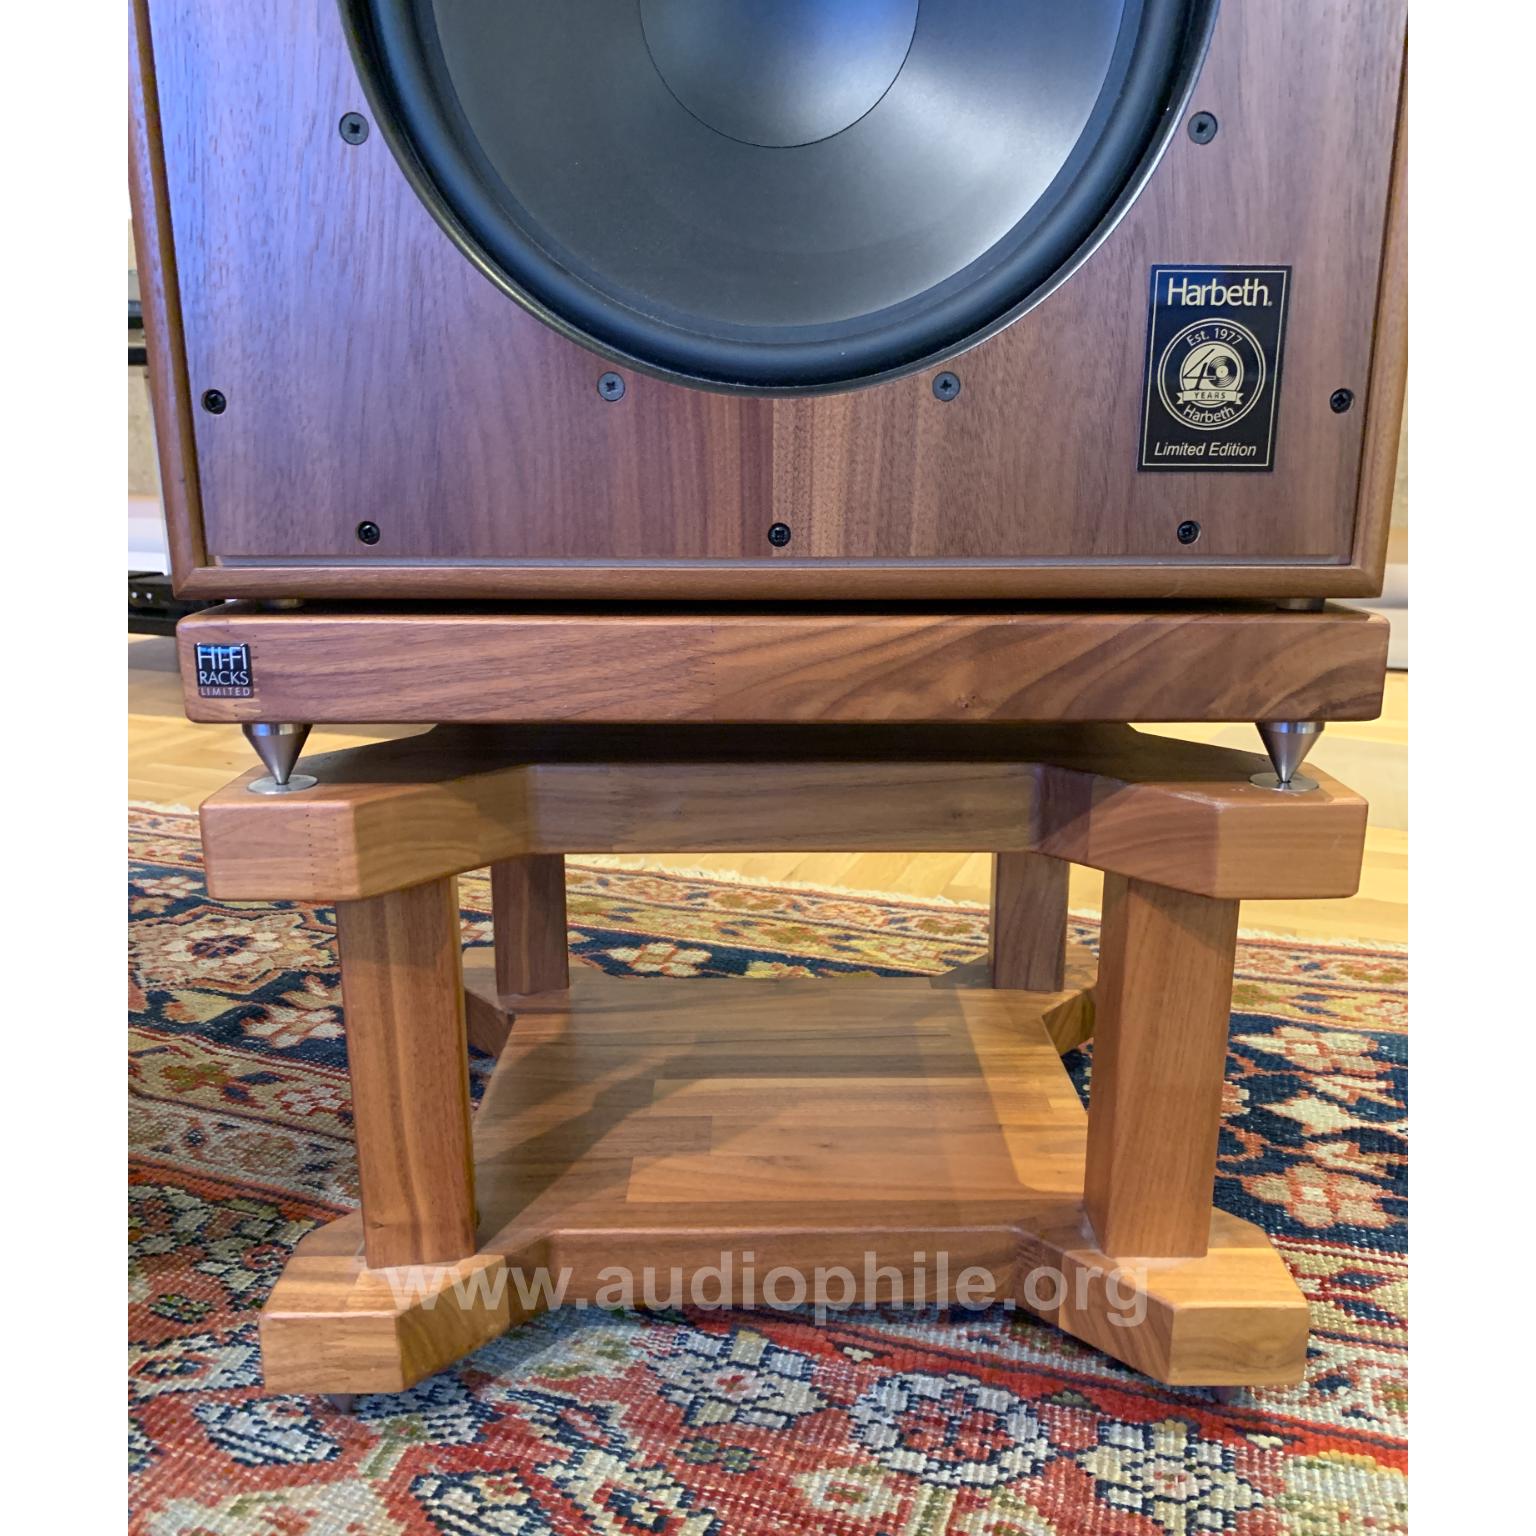 Harbeth Monitor 40.2 40th Anniversary Edition Loudspeaker